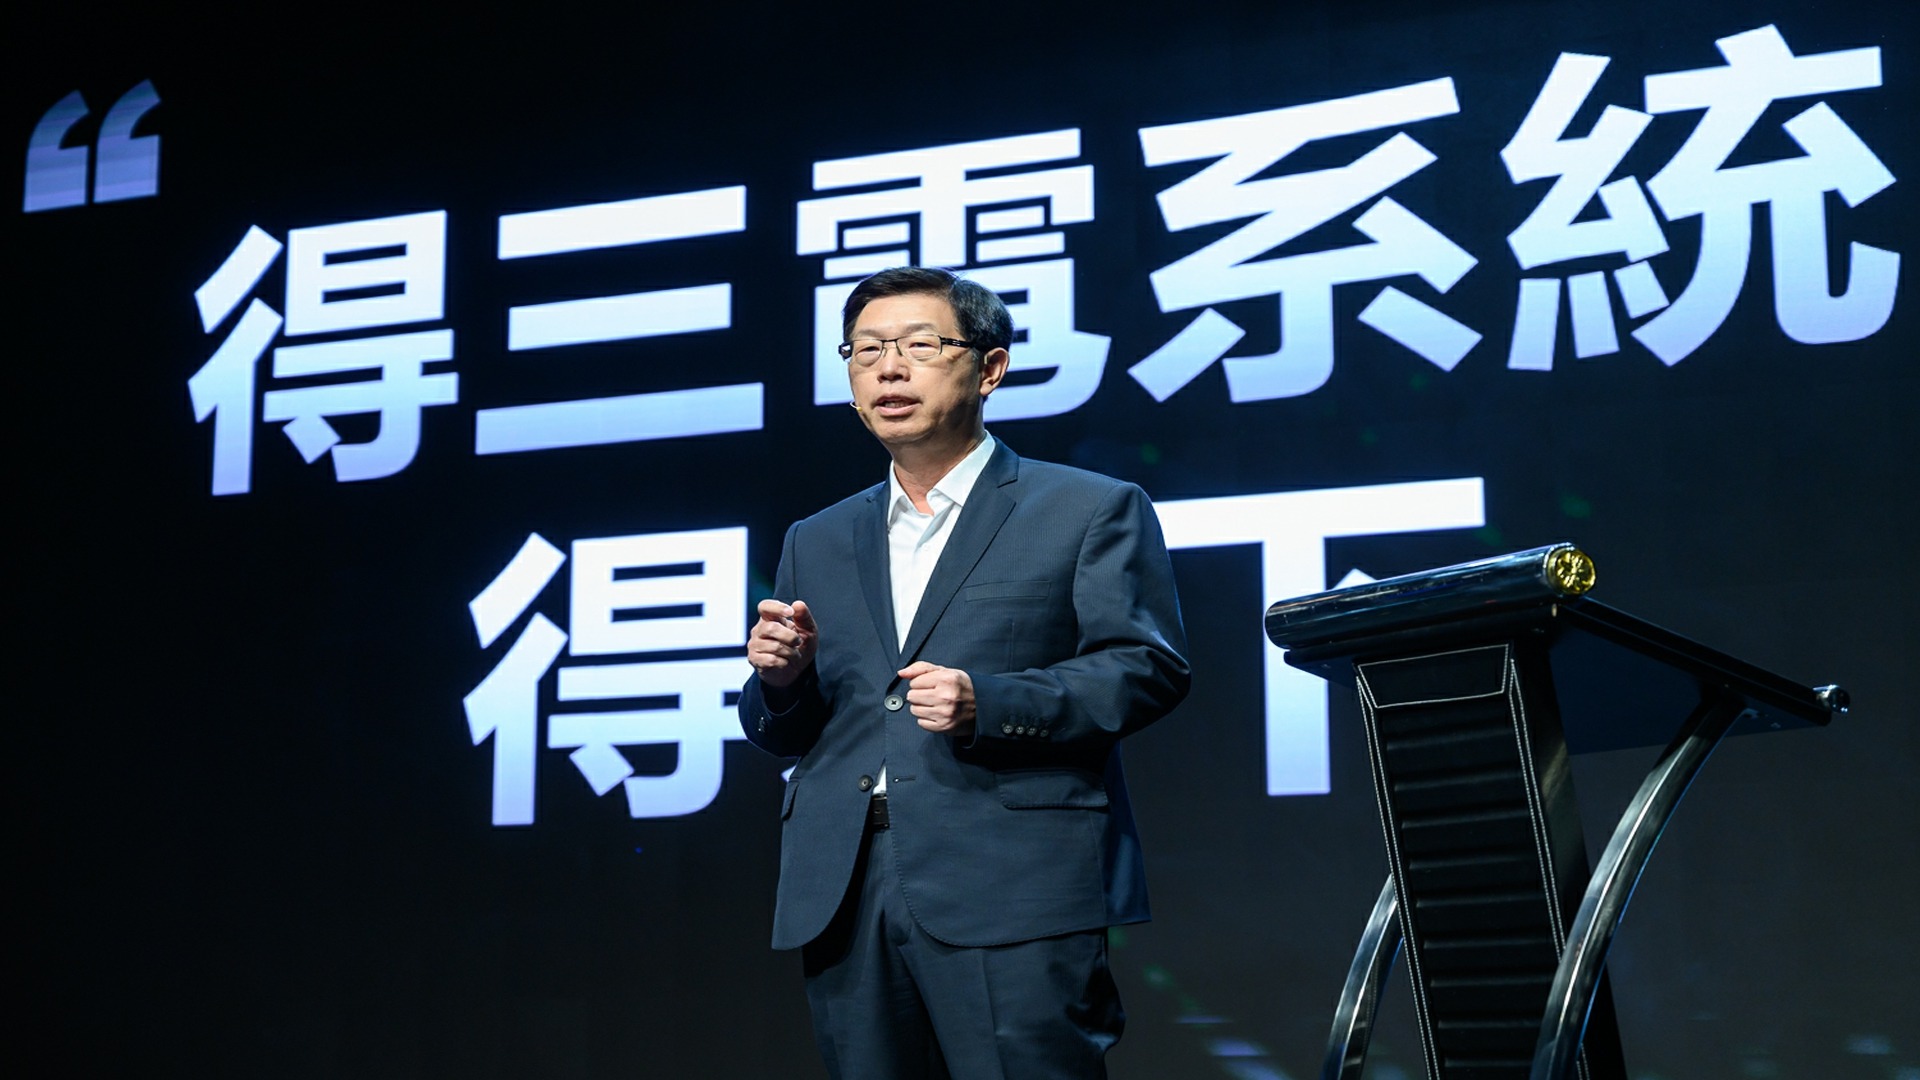 Foxconn Chairman Young Liu At The Foxconn MIH Platform